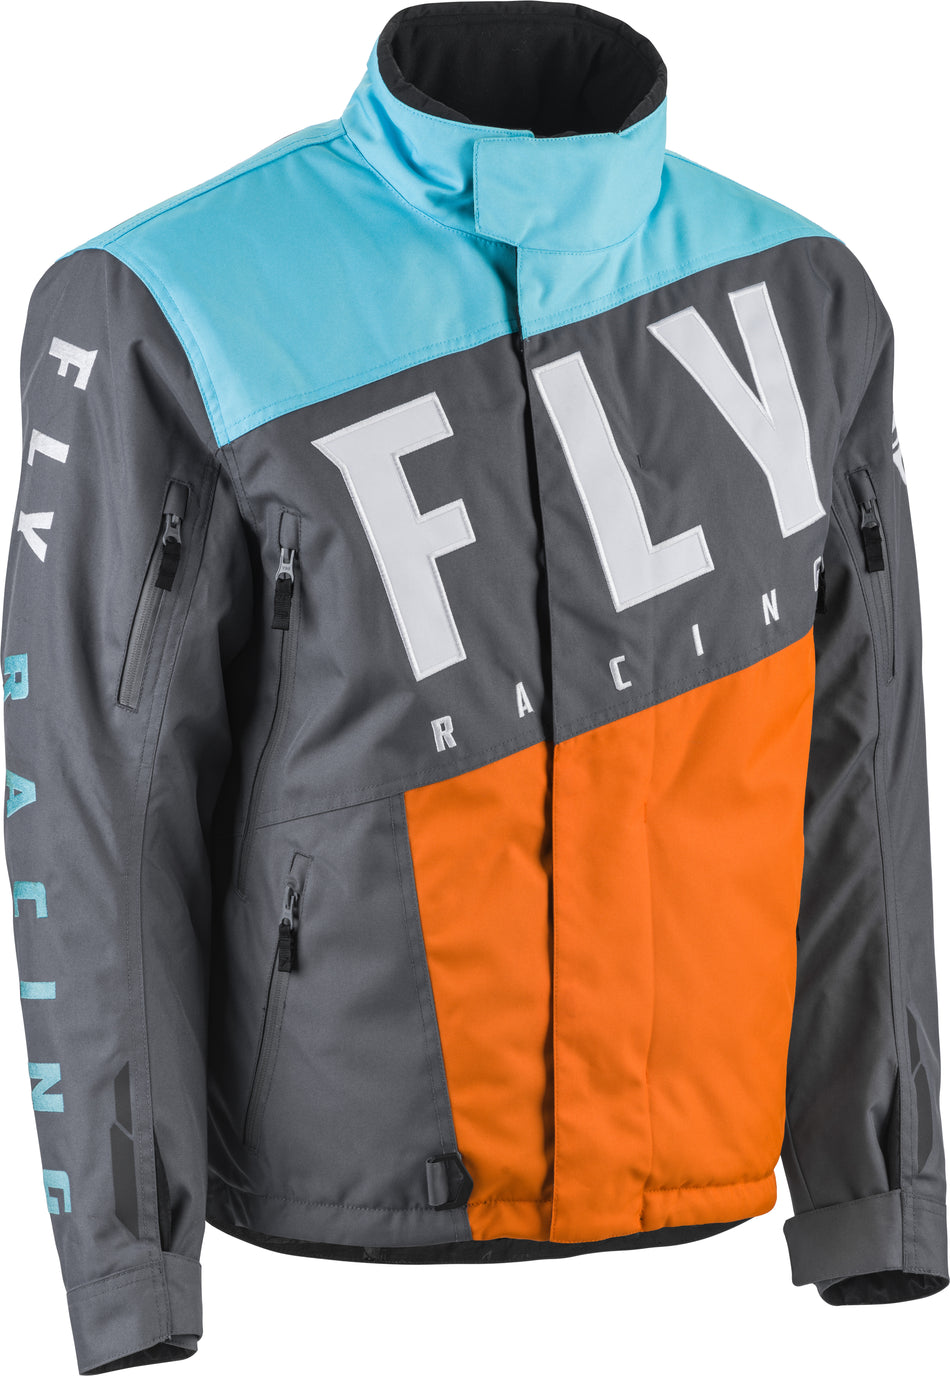 FLY RACING Snx Pro Jacket Orange/Light Blue/Black Xl 470-4114X